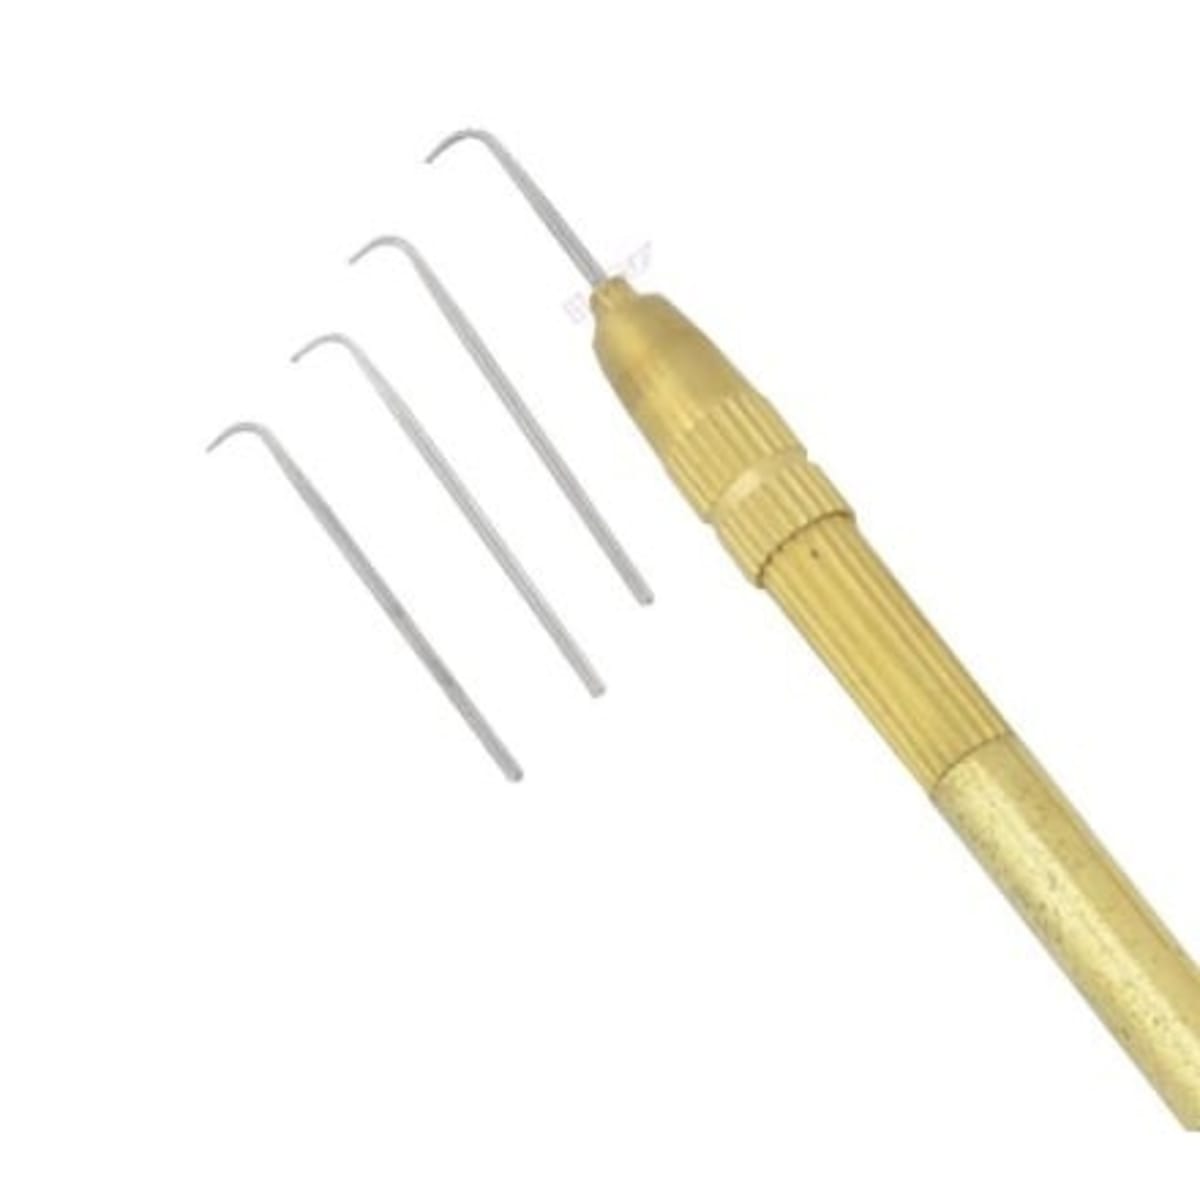 4 Pcs Ventilating Needles +1 Brass Holder